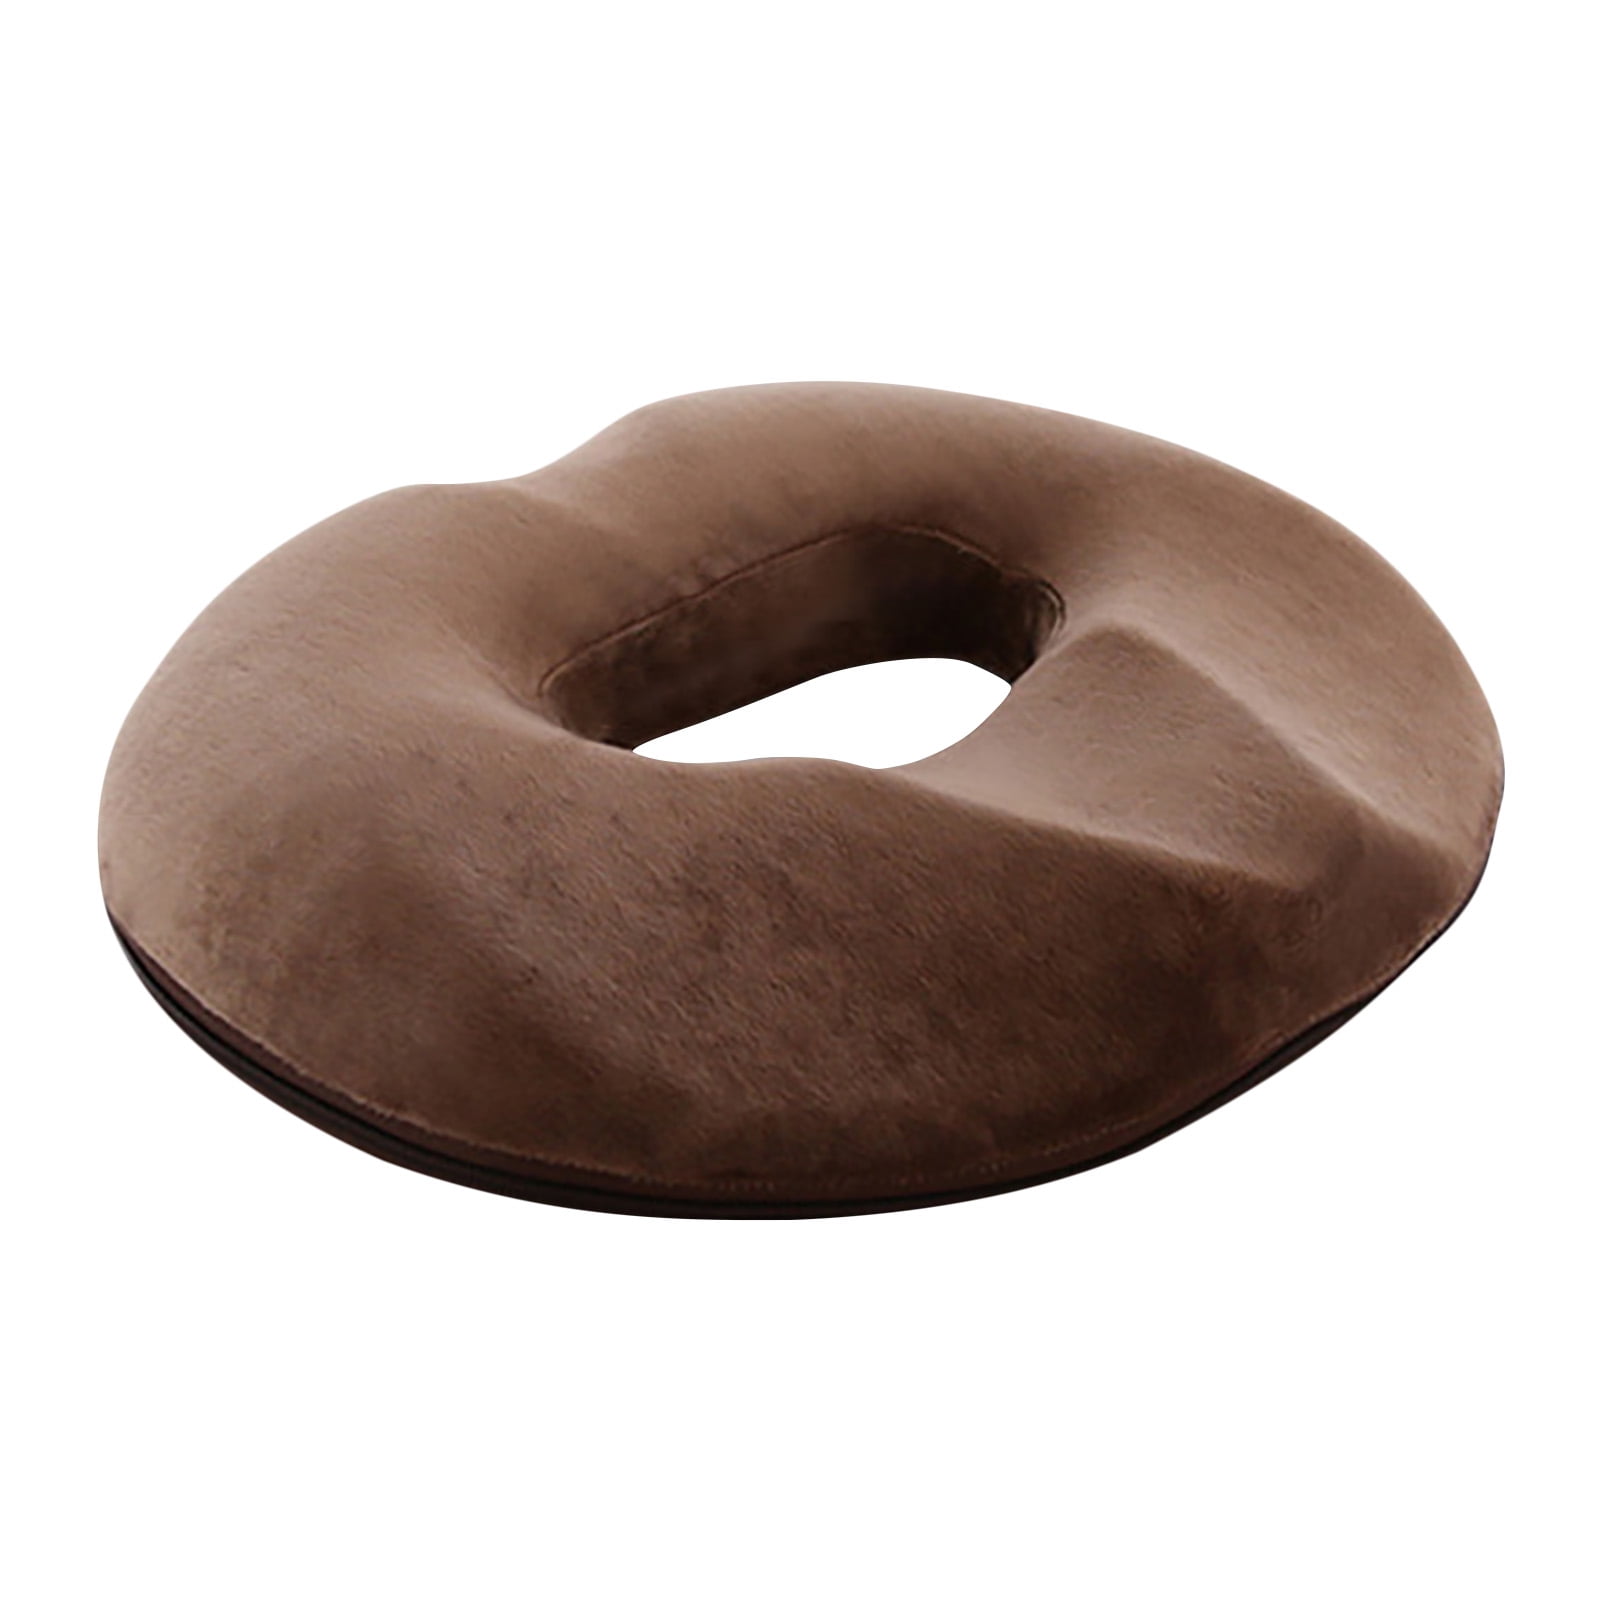 Donut Chair Cushion Memory Foam For Tailbone Coccyx Sciatica Pain 